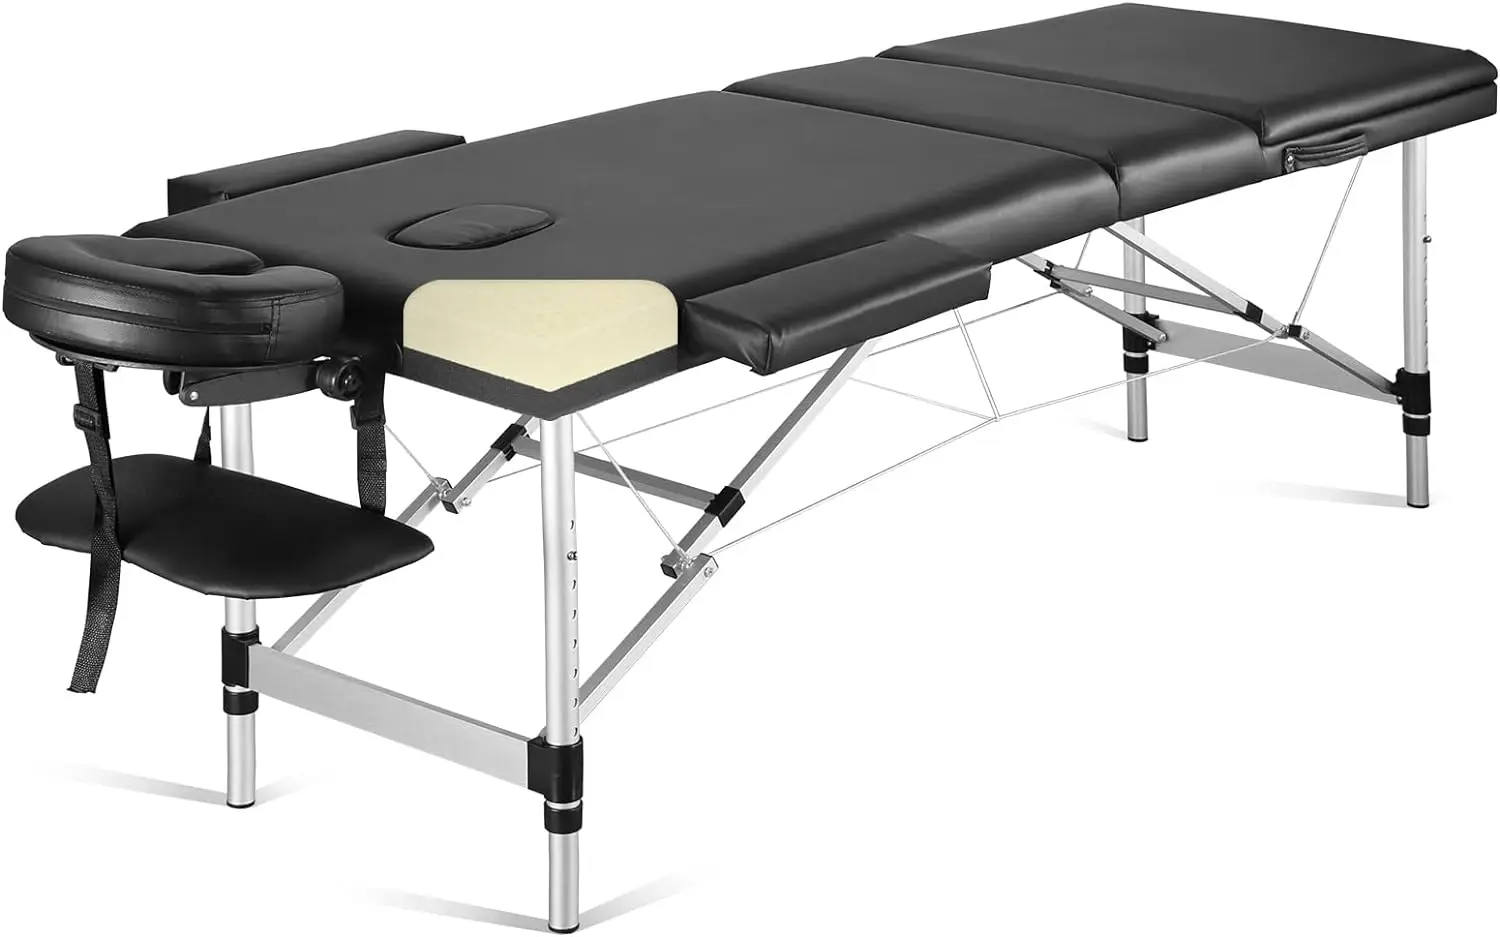 Careboda Portable Massage Table Professional Massage Bed 3 Fold 82 Inches Height Adjustable for Spa Salon Lash Tattoo with Alumi